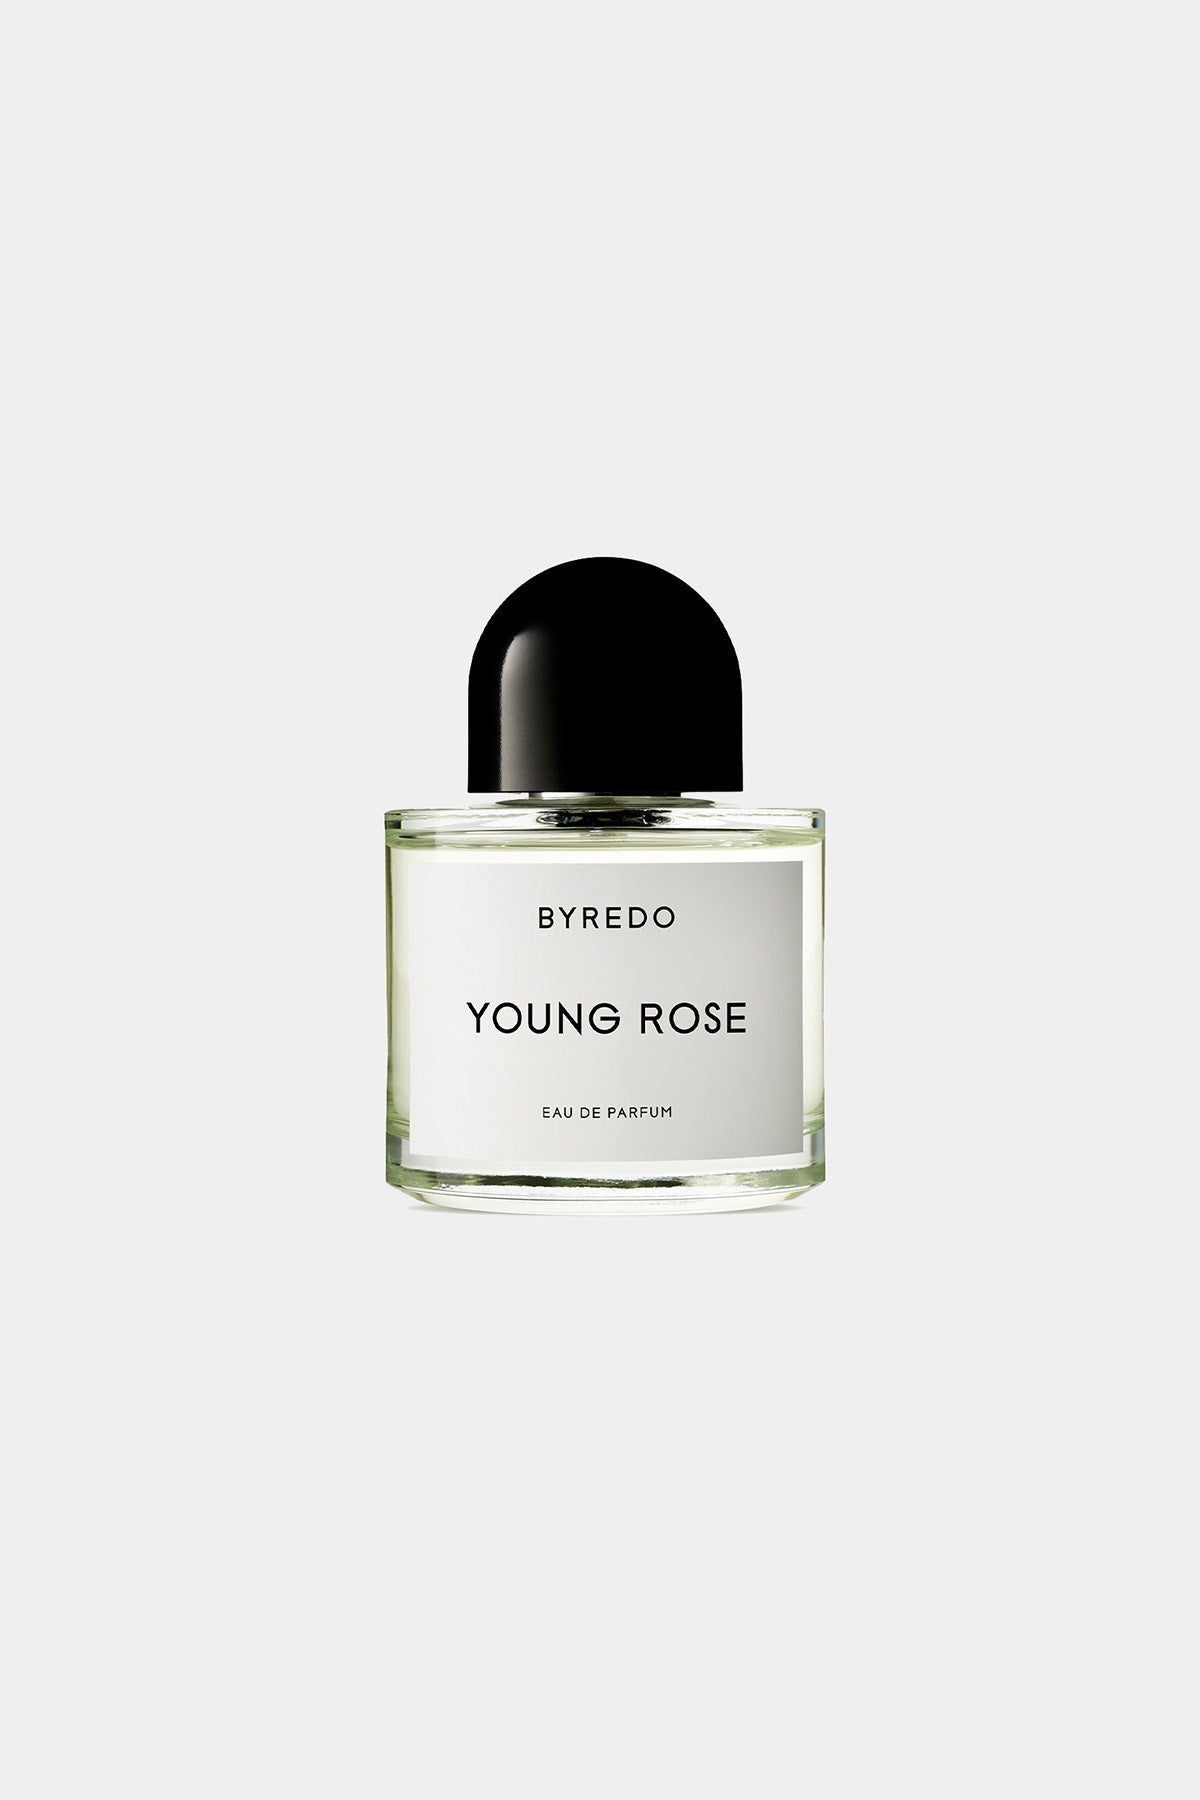 BYREDO | YOUNG ROSE EAU DE PARFUM